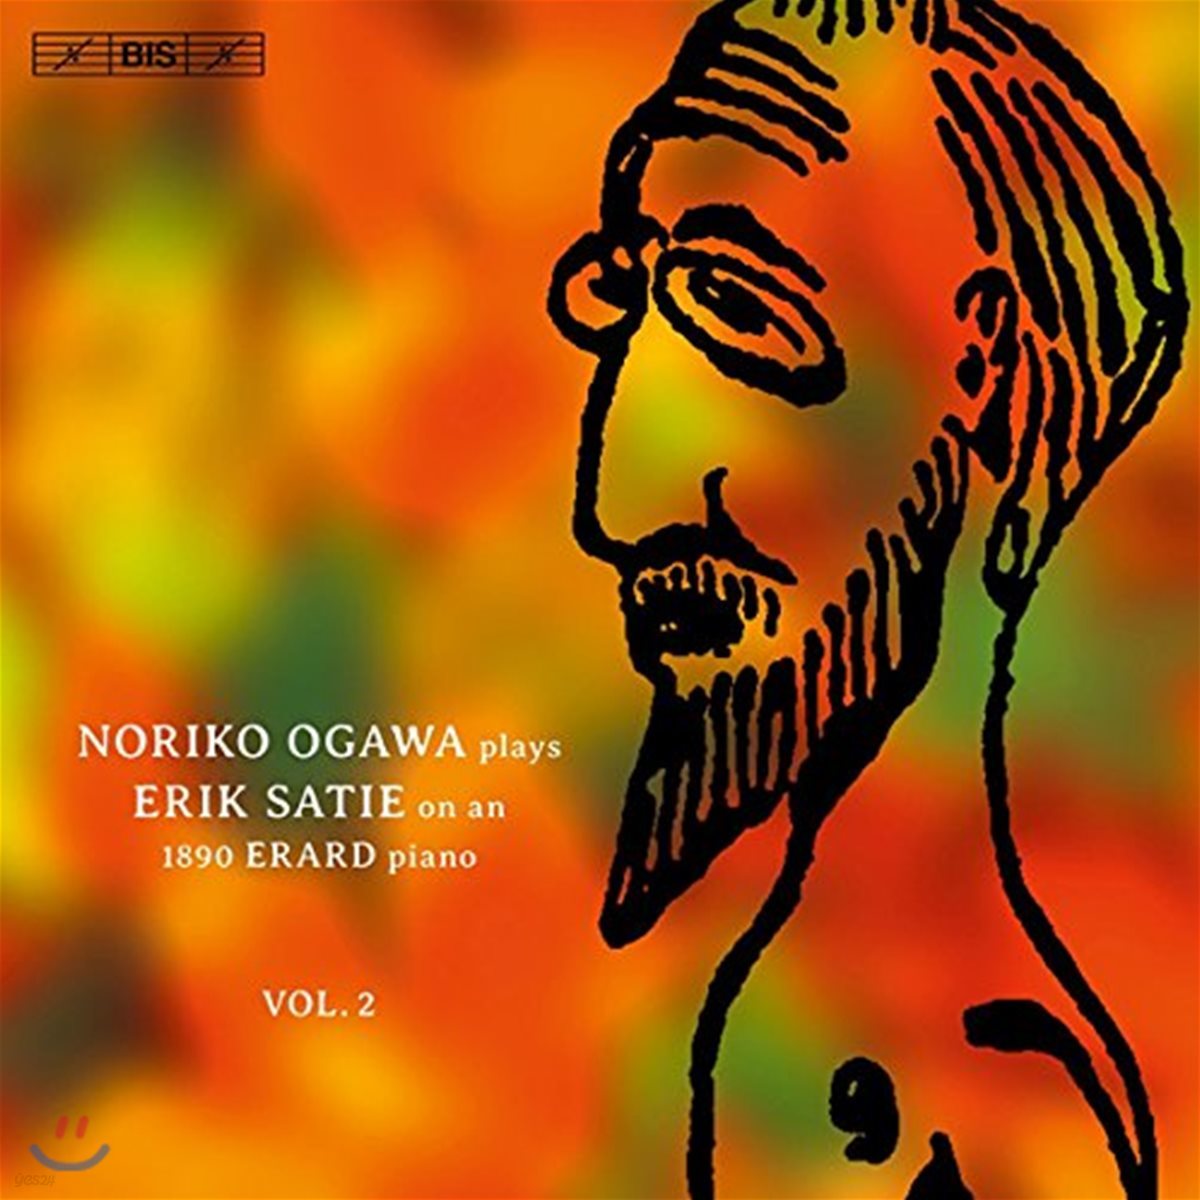 Noriko Ogawa 에릭 사티: 피아노 독주 2집 - 노리코 오가와 (Plays Erik Satie on an 1890 Erard Piano Vol.2) 